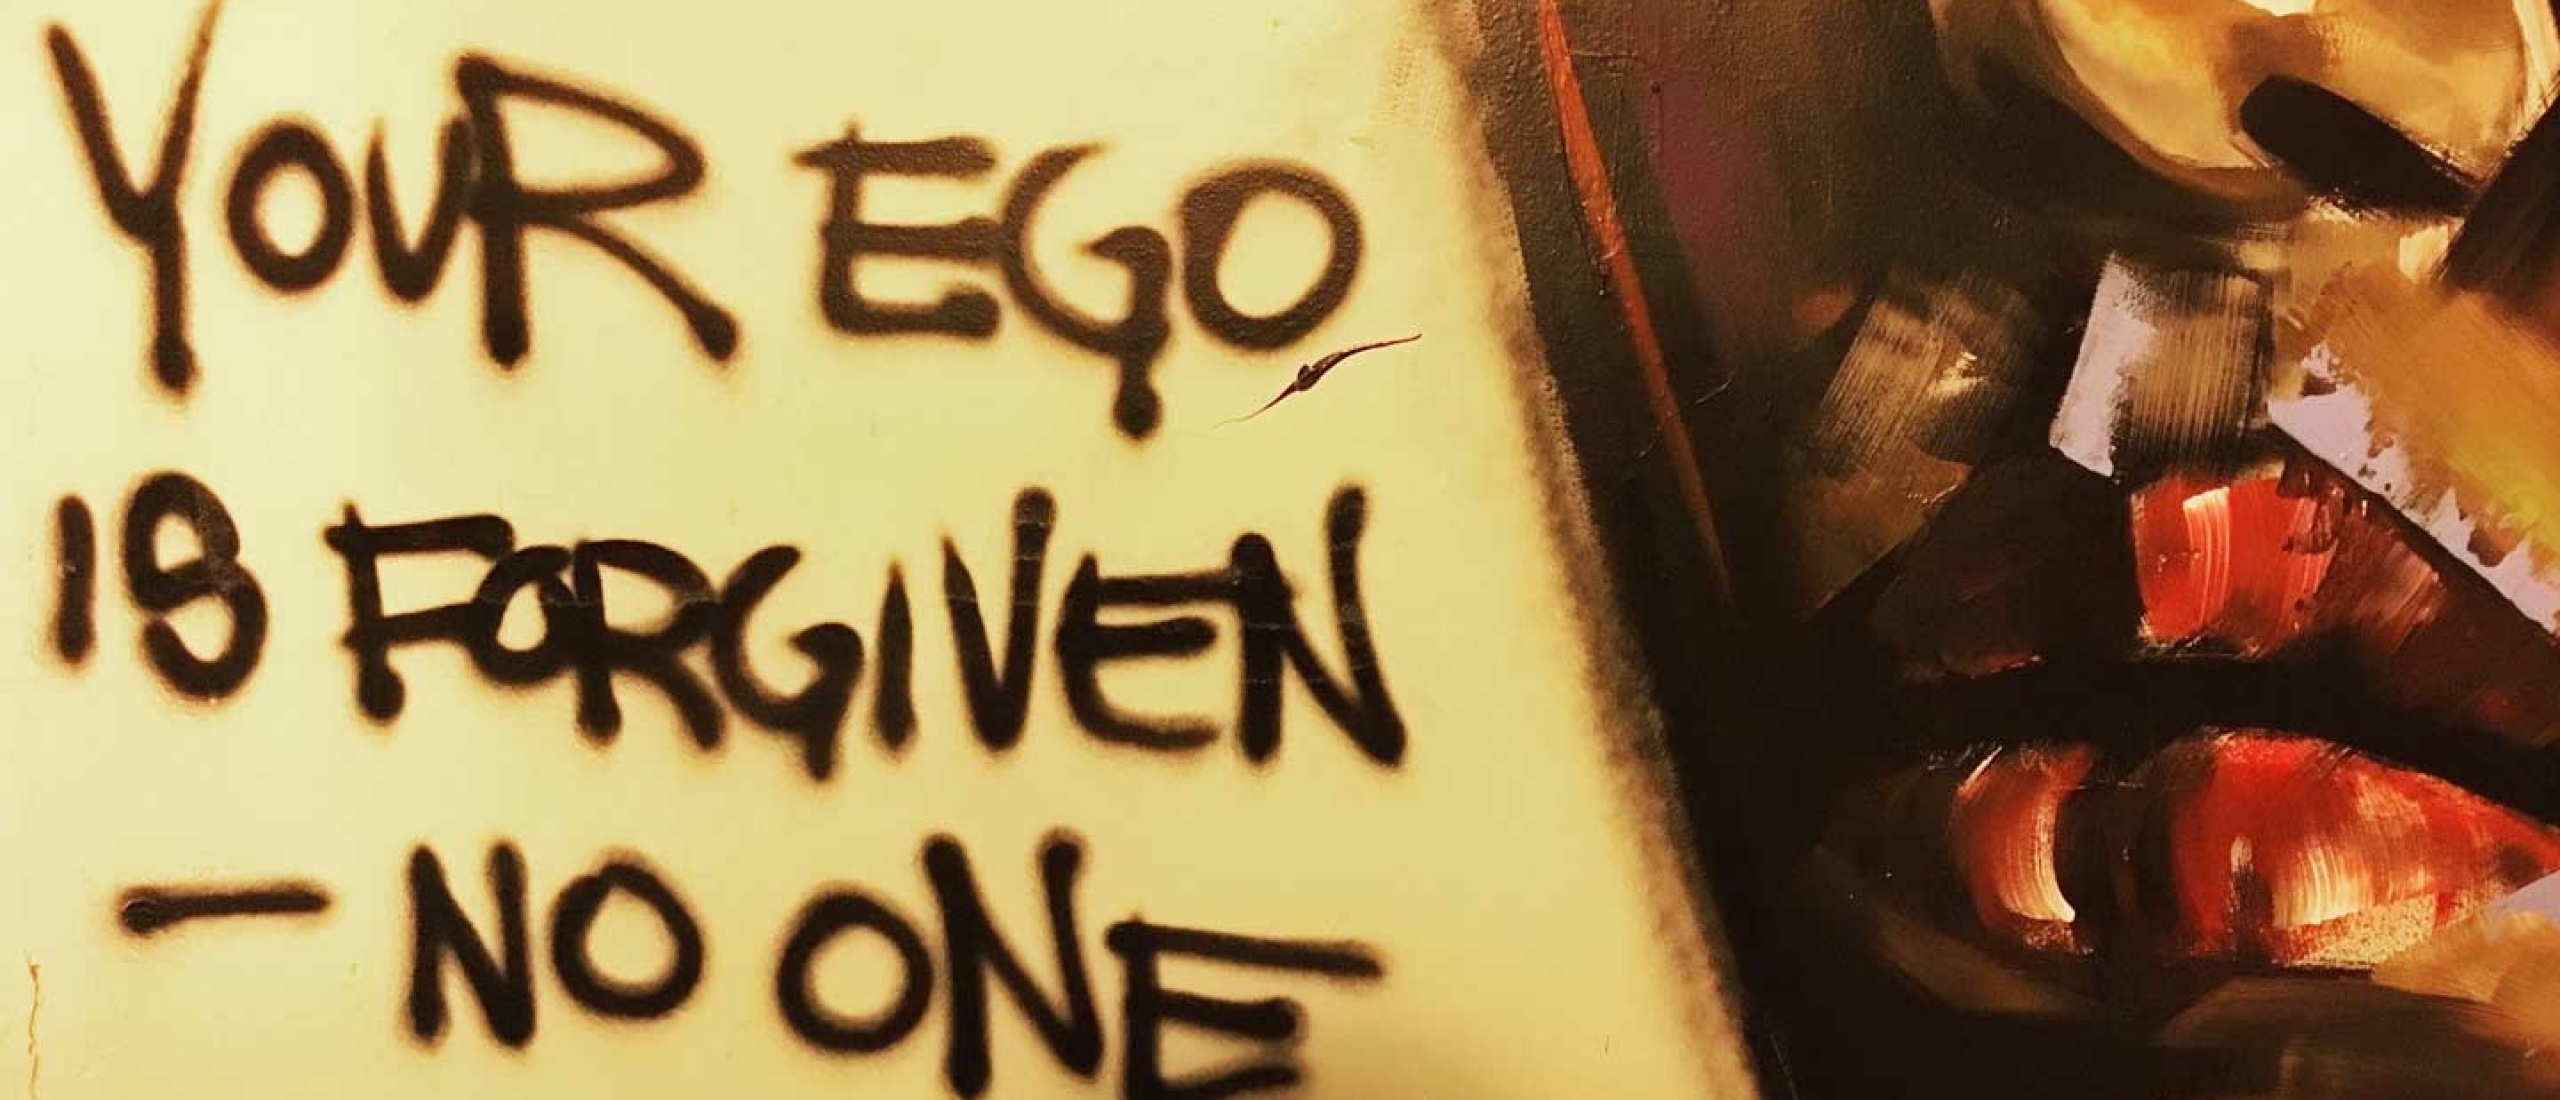 De ‘grote slechte ego’ mythe